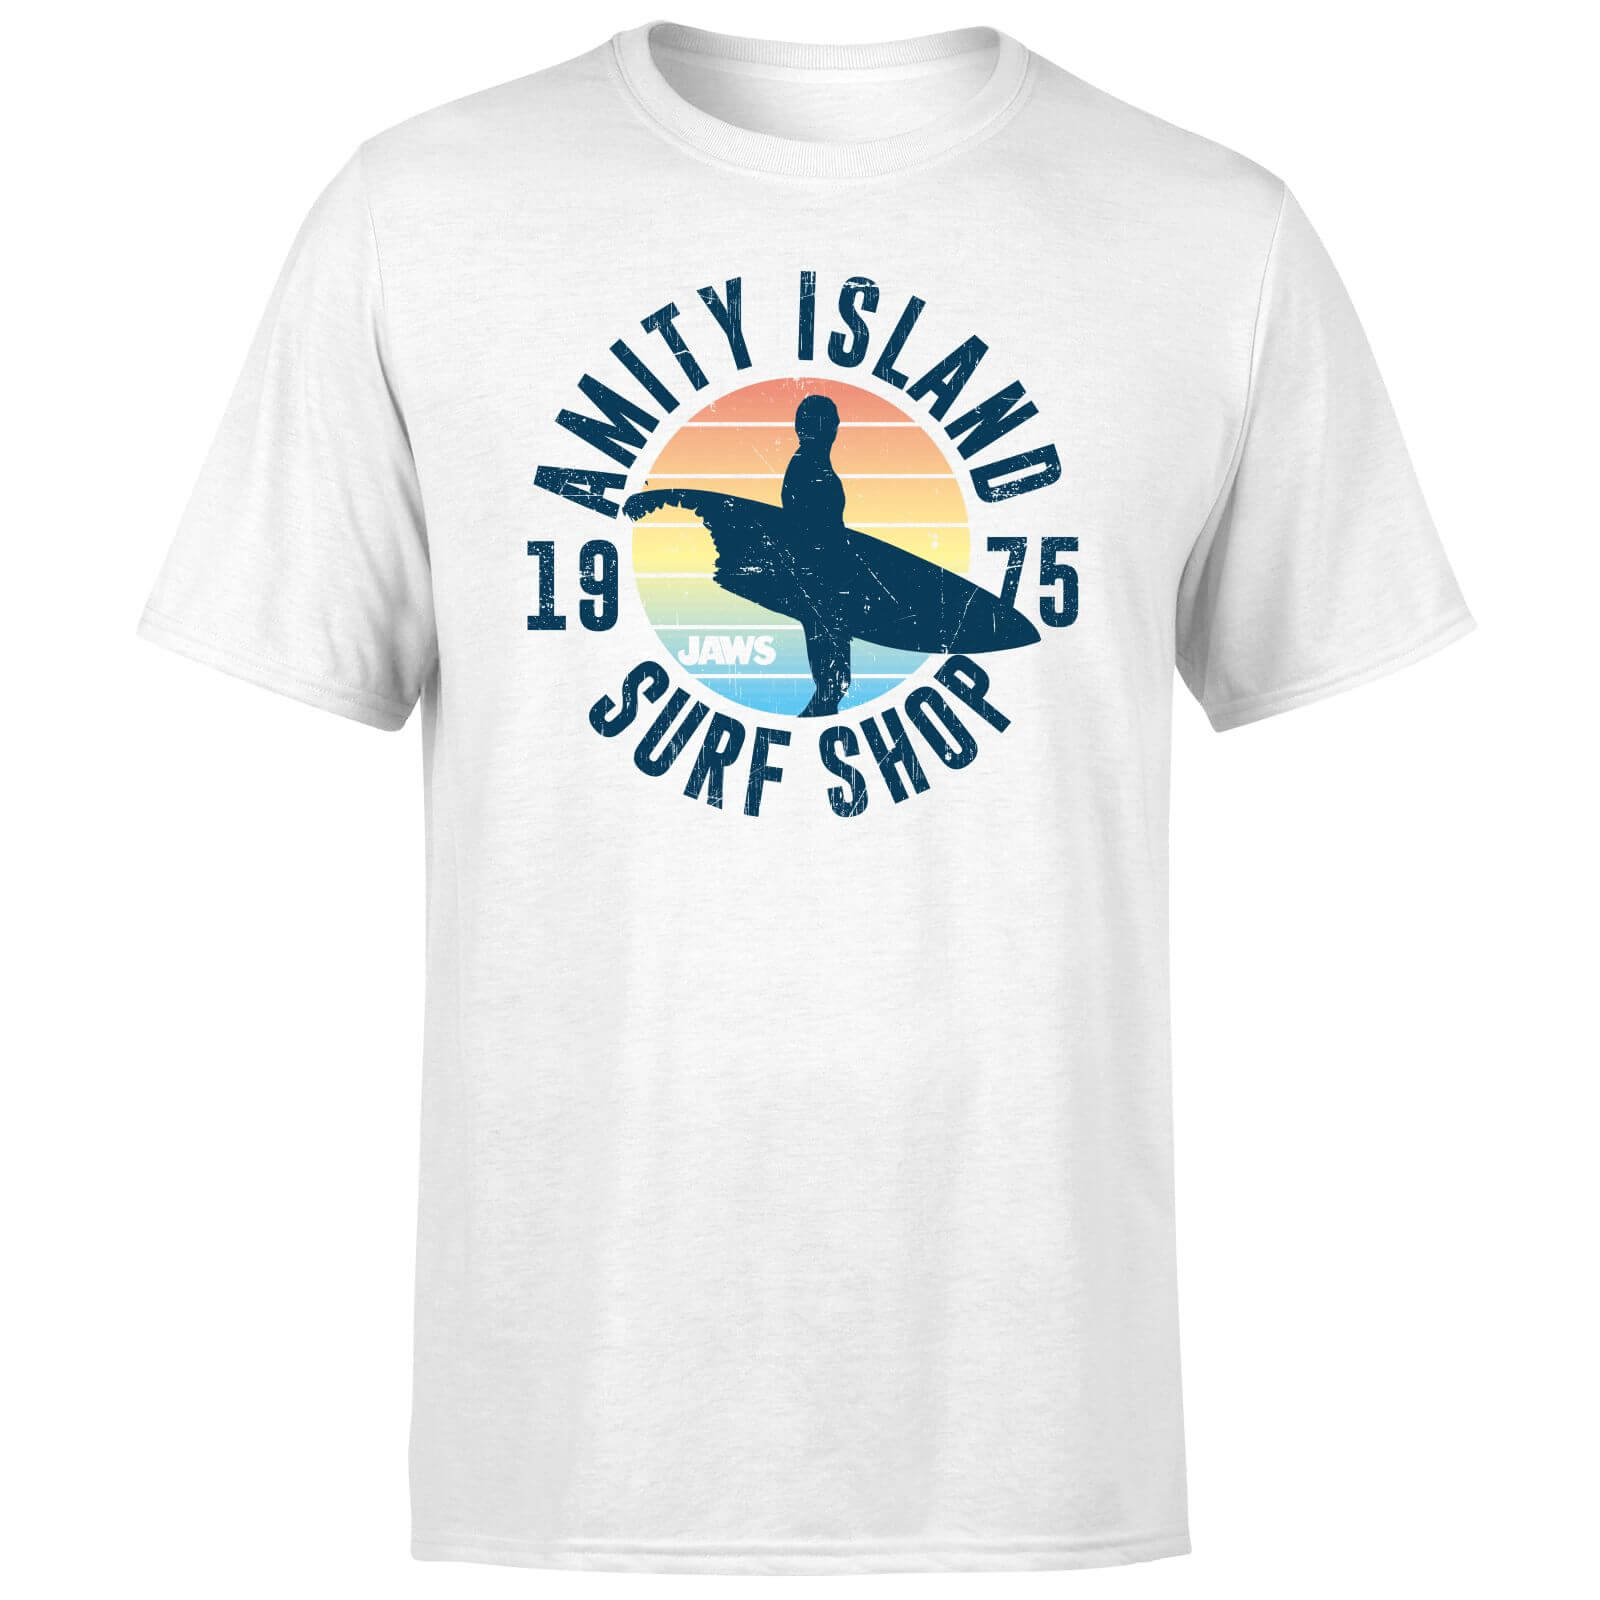 Jaws amity surf shop t-shirt - white - xxl